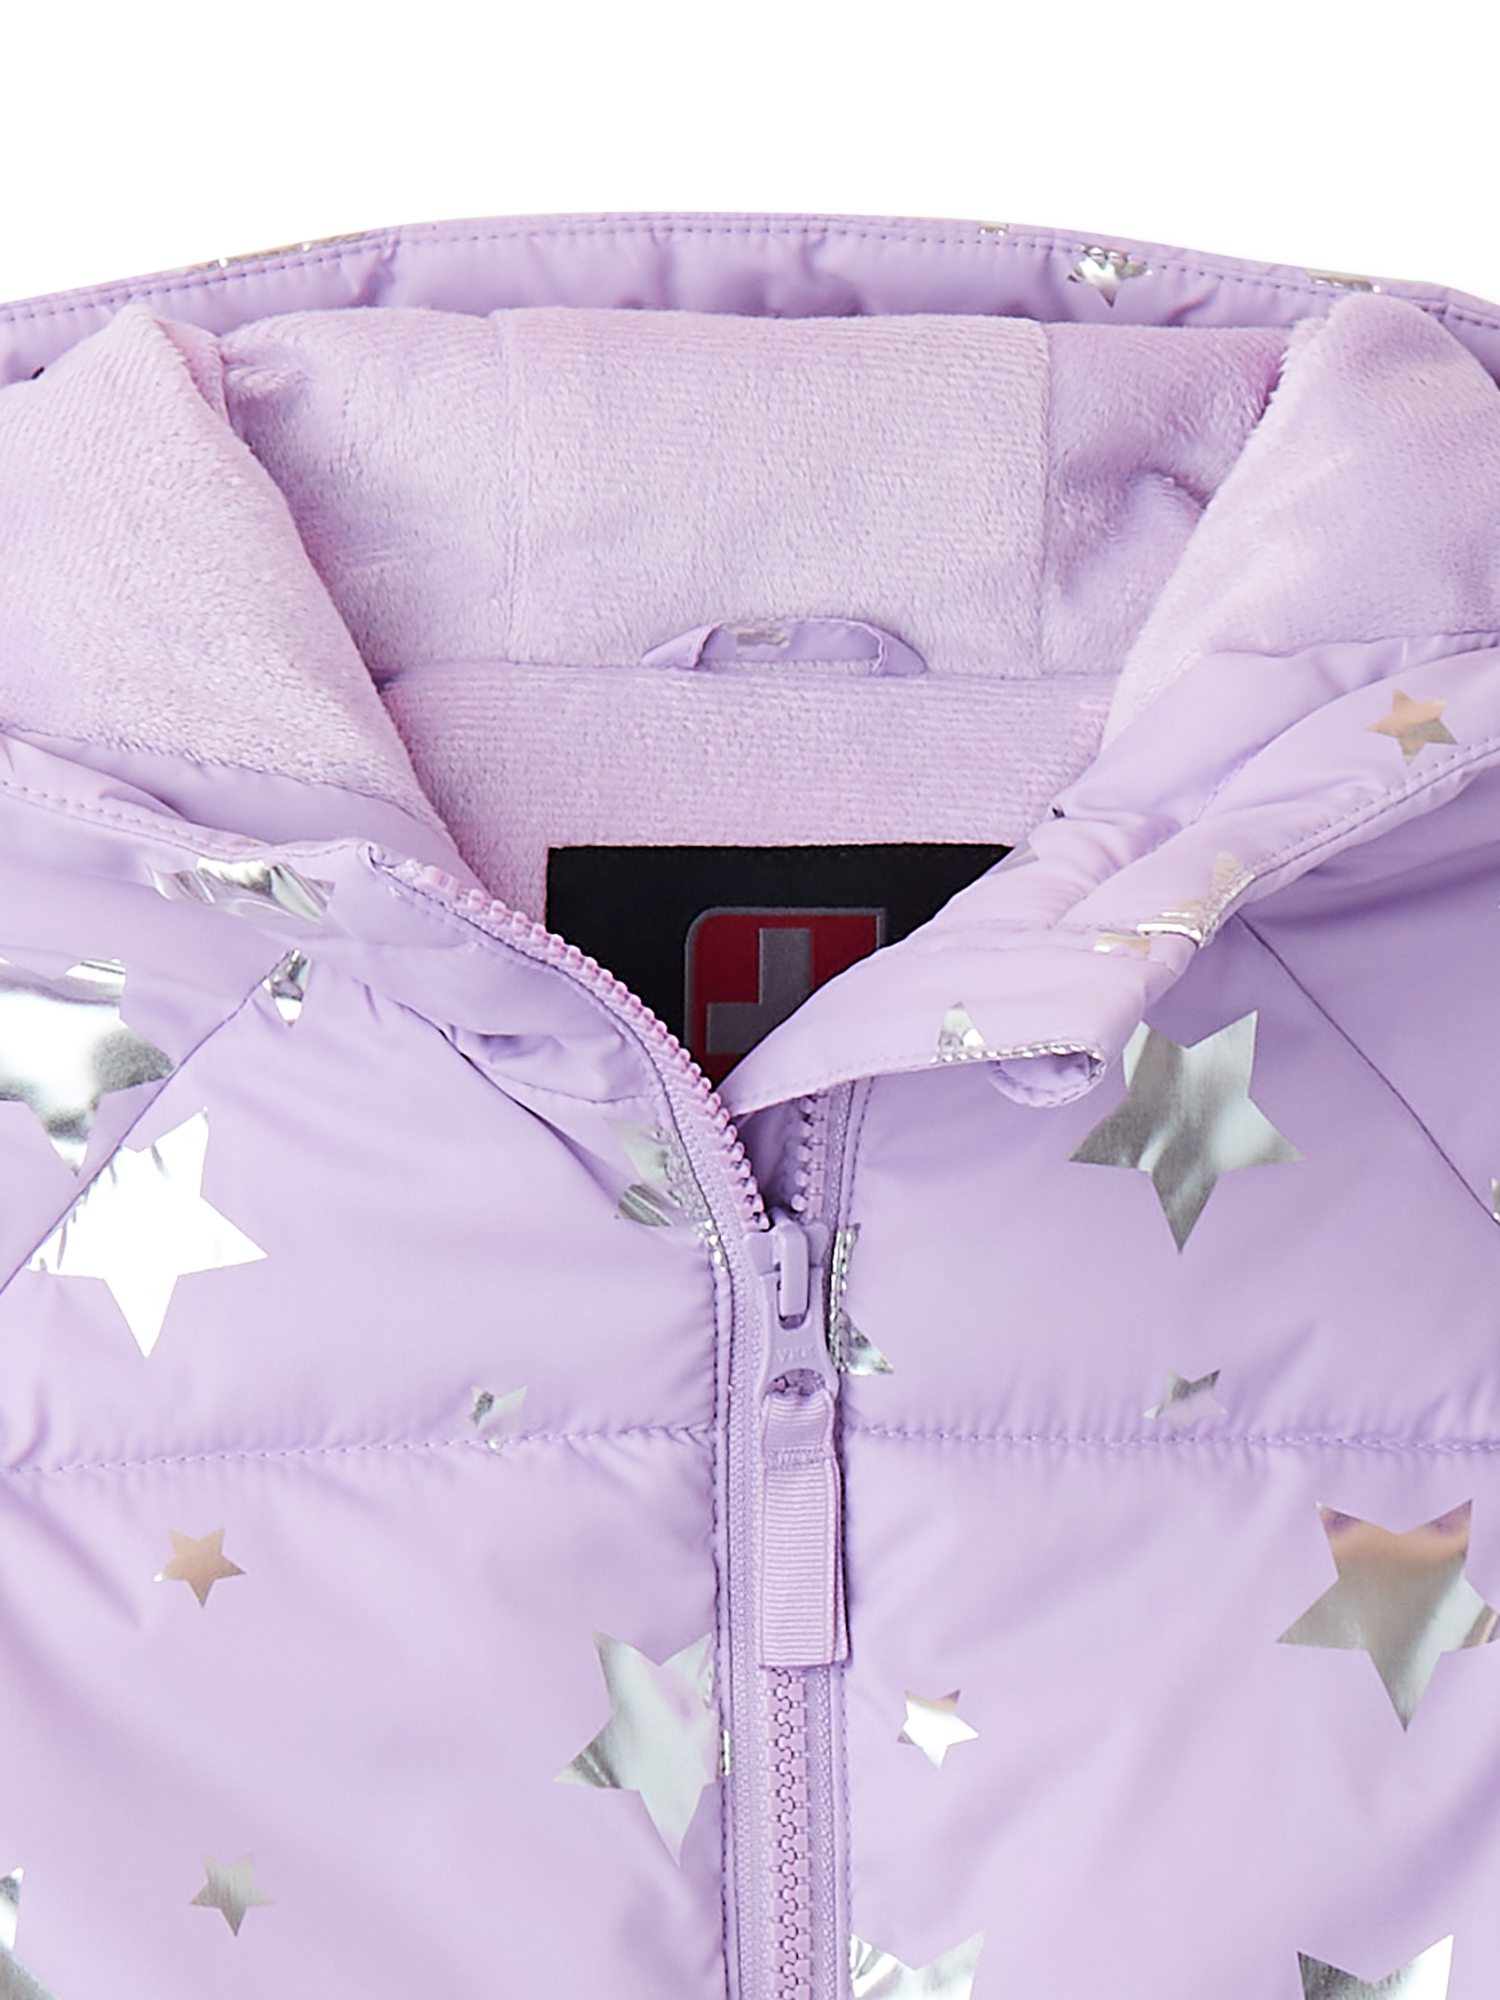 Swiss Tech Girls Winter Puffer Jacket with Hood, Sizes 4-18 & Plus - image 4 of 4